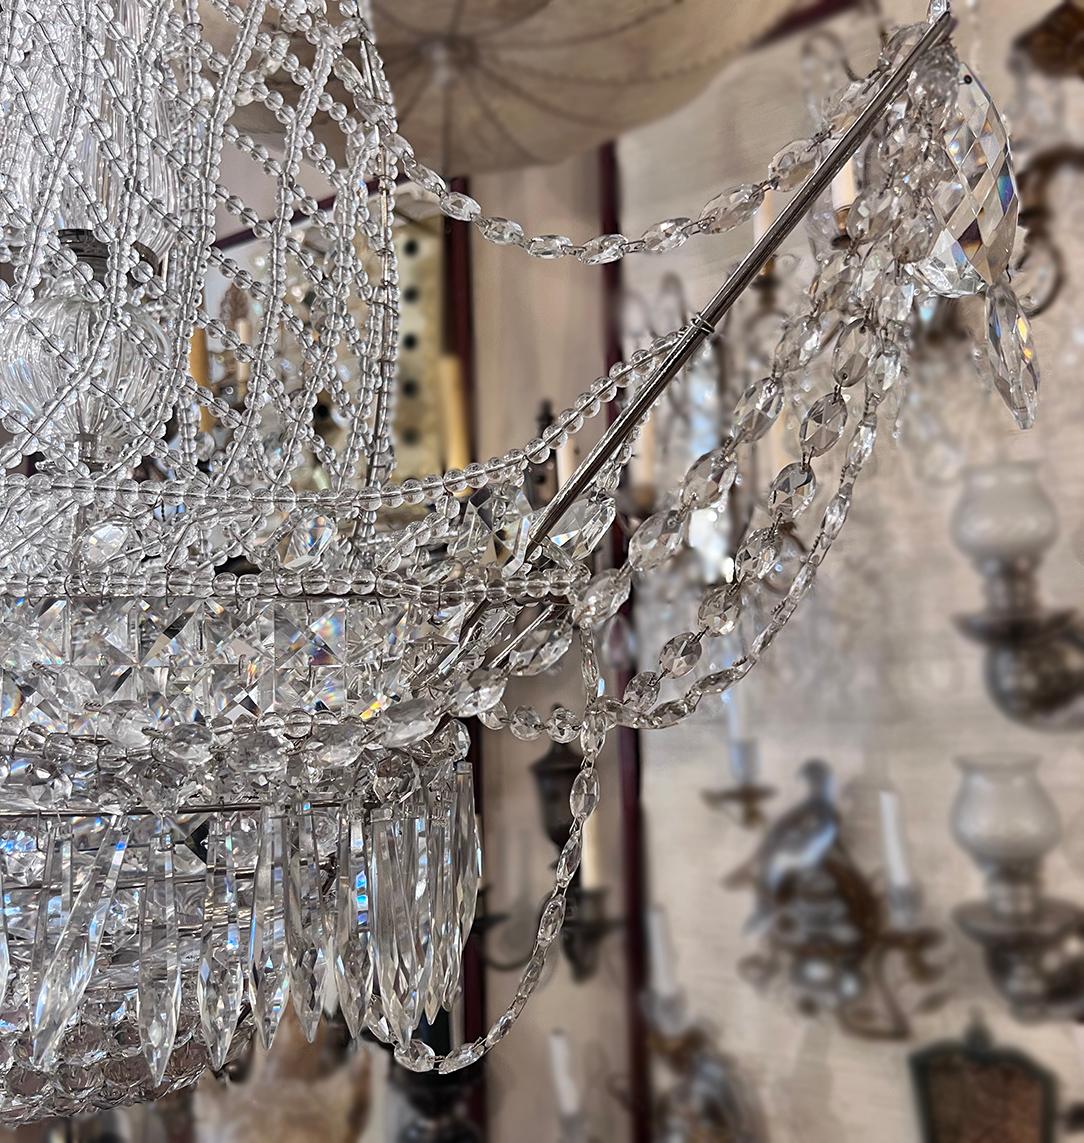 crystal sailboat chandelier